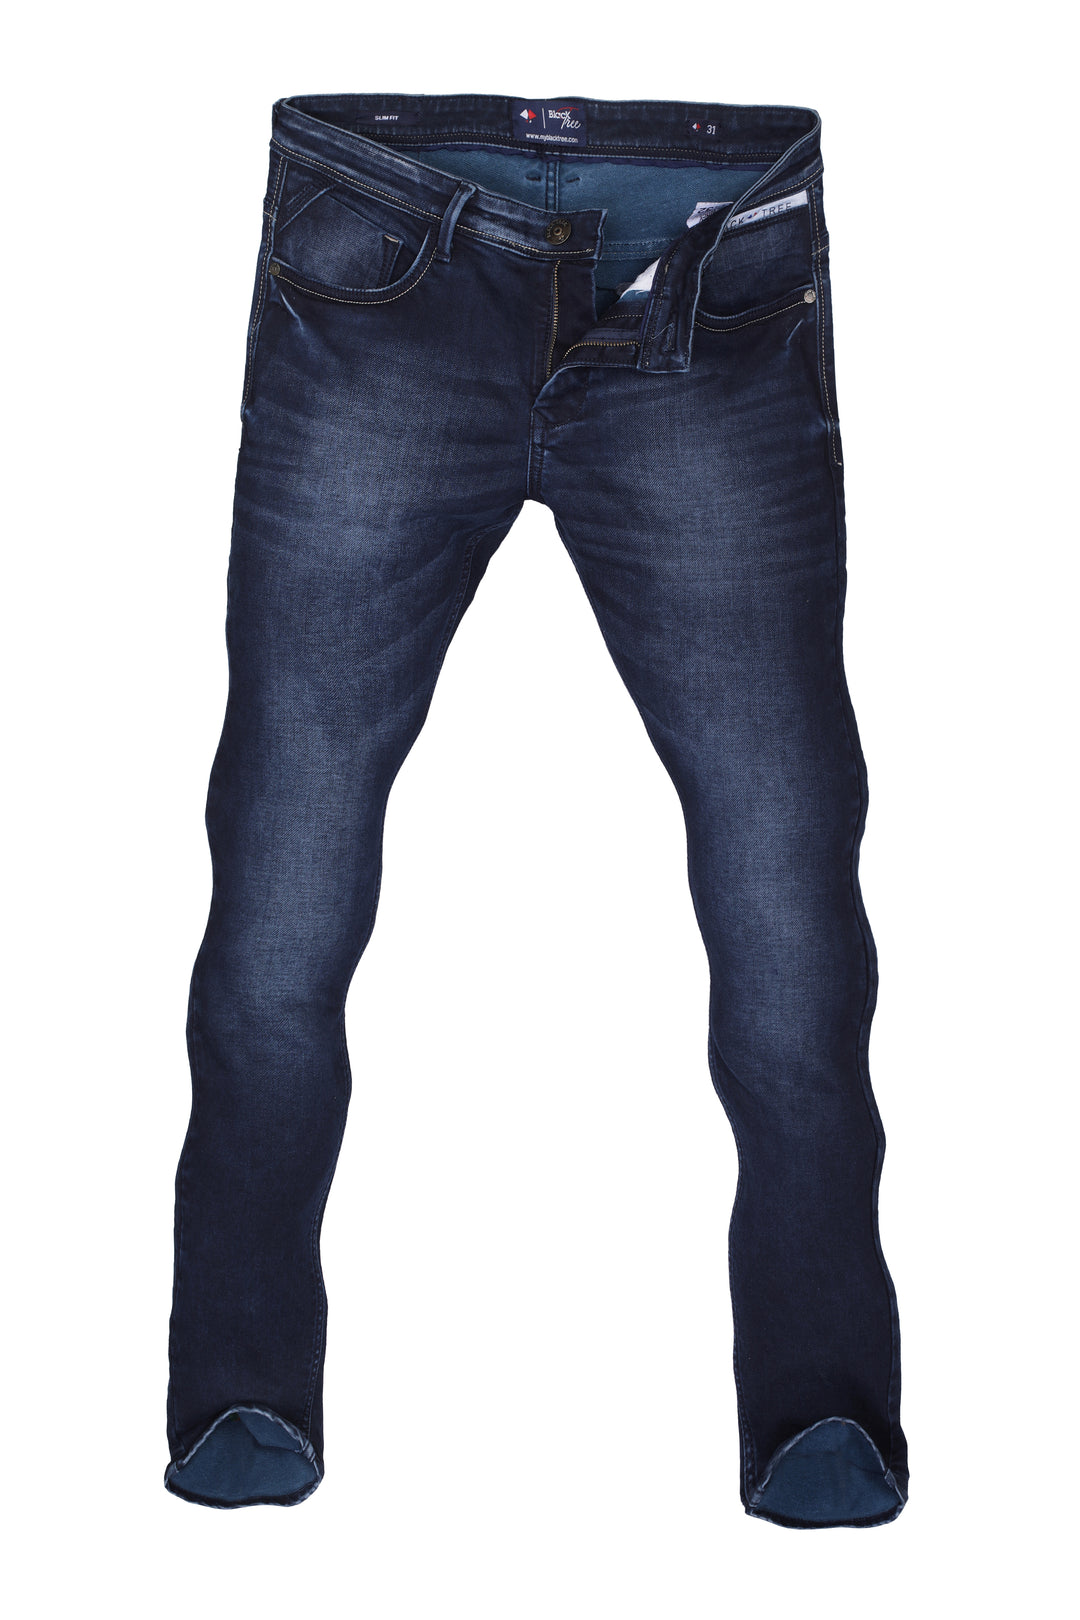 BlackTree Men's Slim Fit Tyro Blue  Jeans BT004 ..